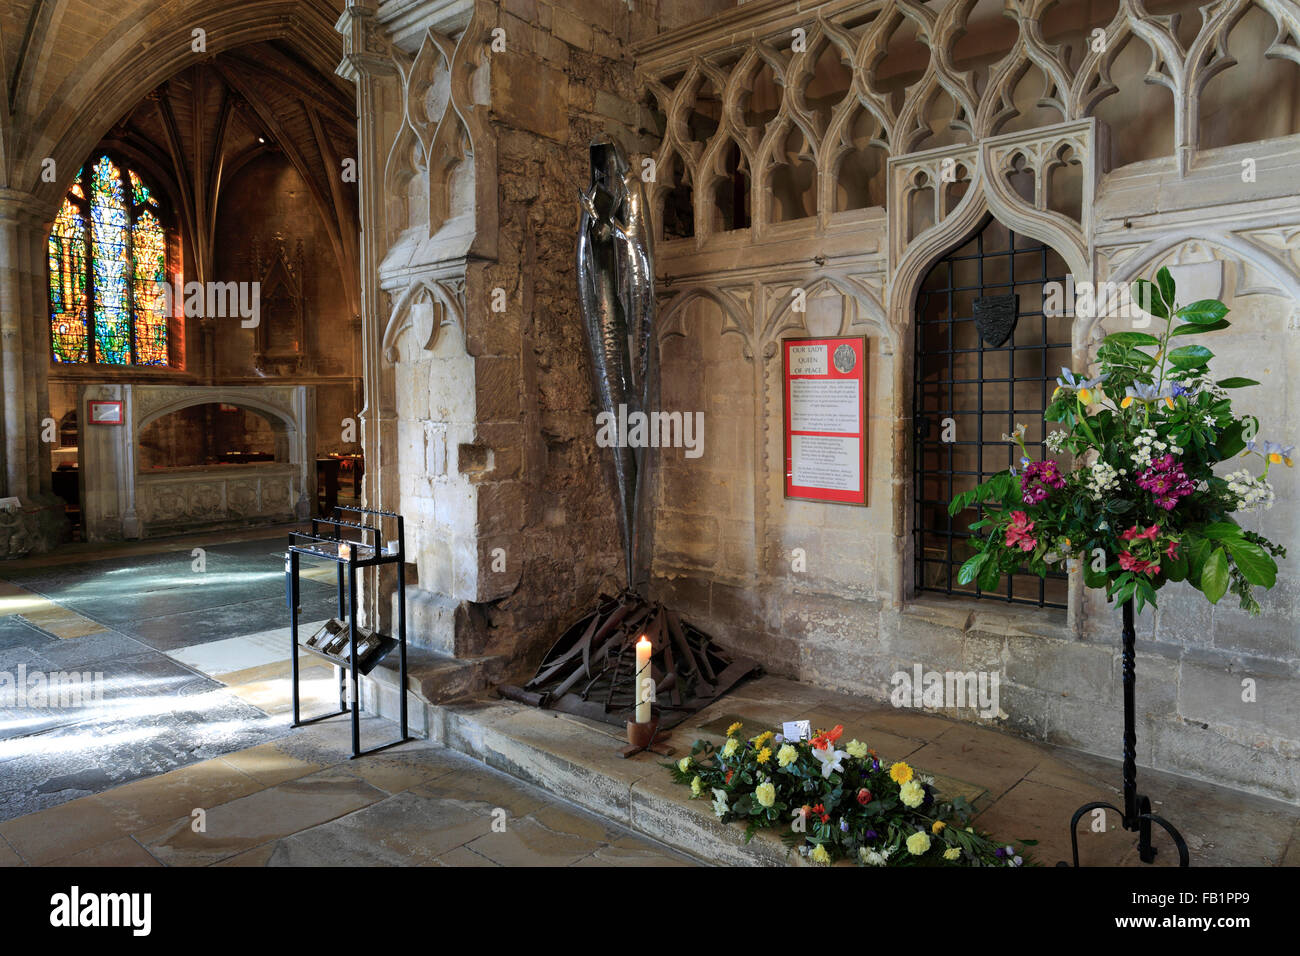 Innere des Tewkesbury Abbey (Abtei St. Marienkirche der Jungfrau), Stadt Tewkesbury, Gloucestershire, England, Vereinigtes Königreich, Stockfoto